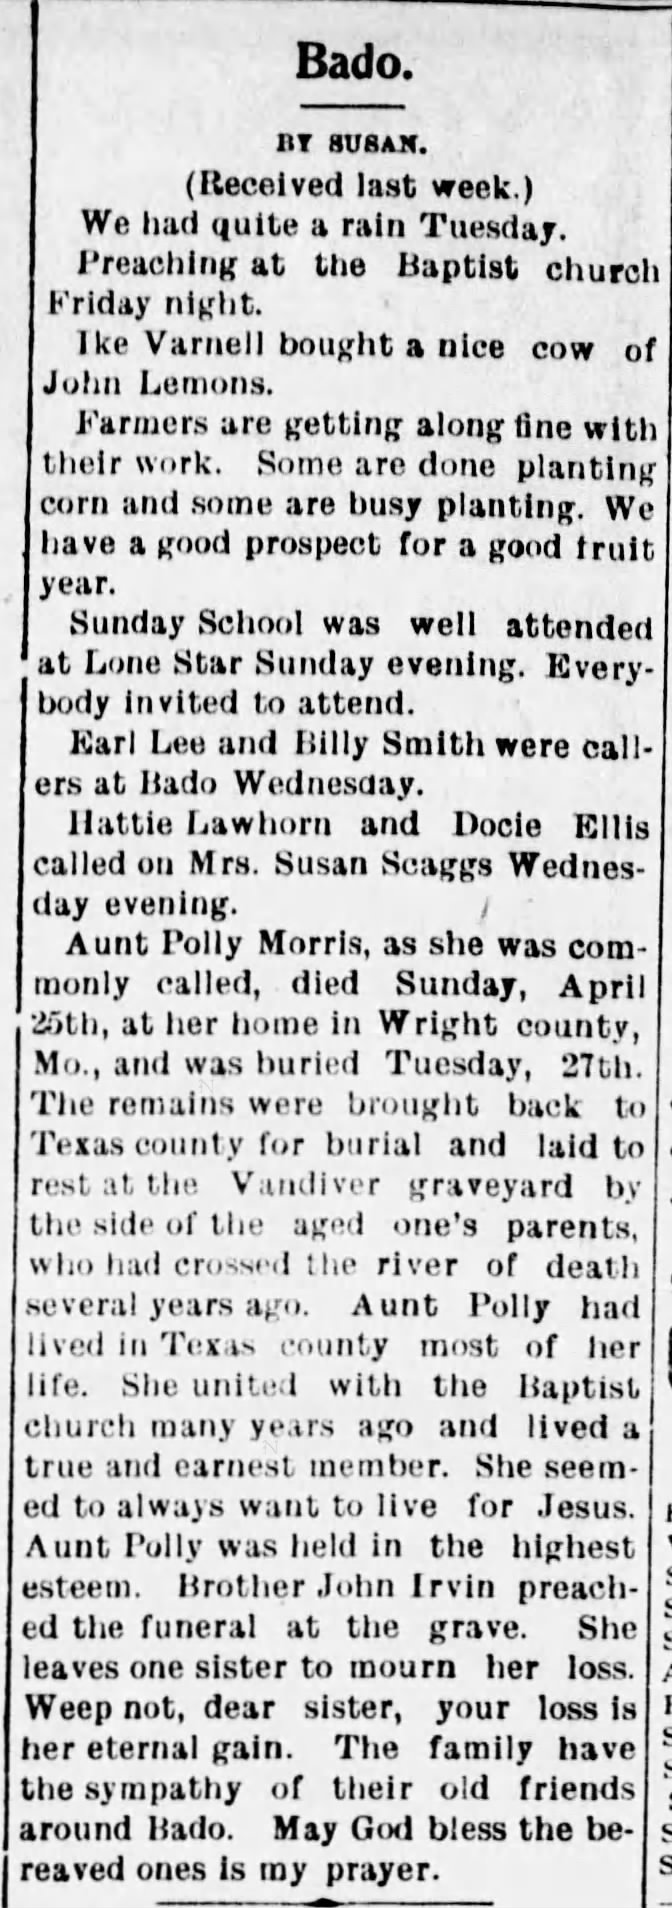 Aunt Polly Morris dies: Bado, Missouri news